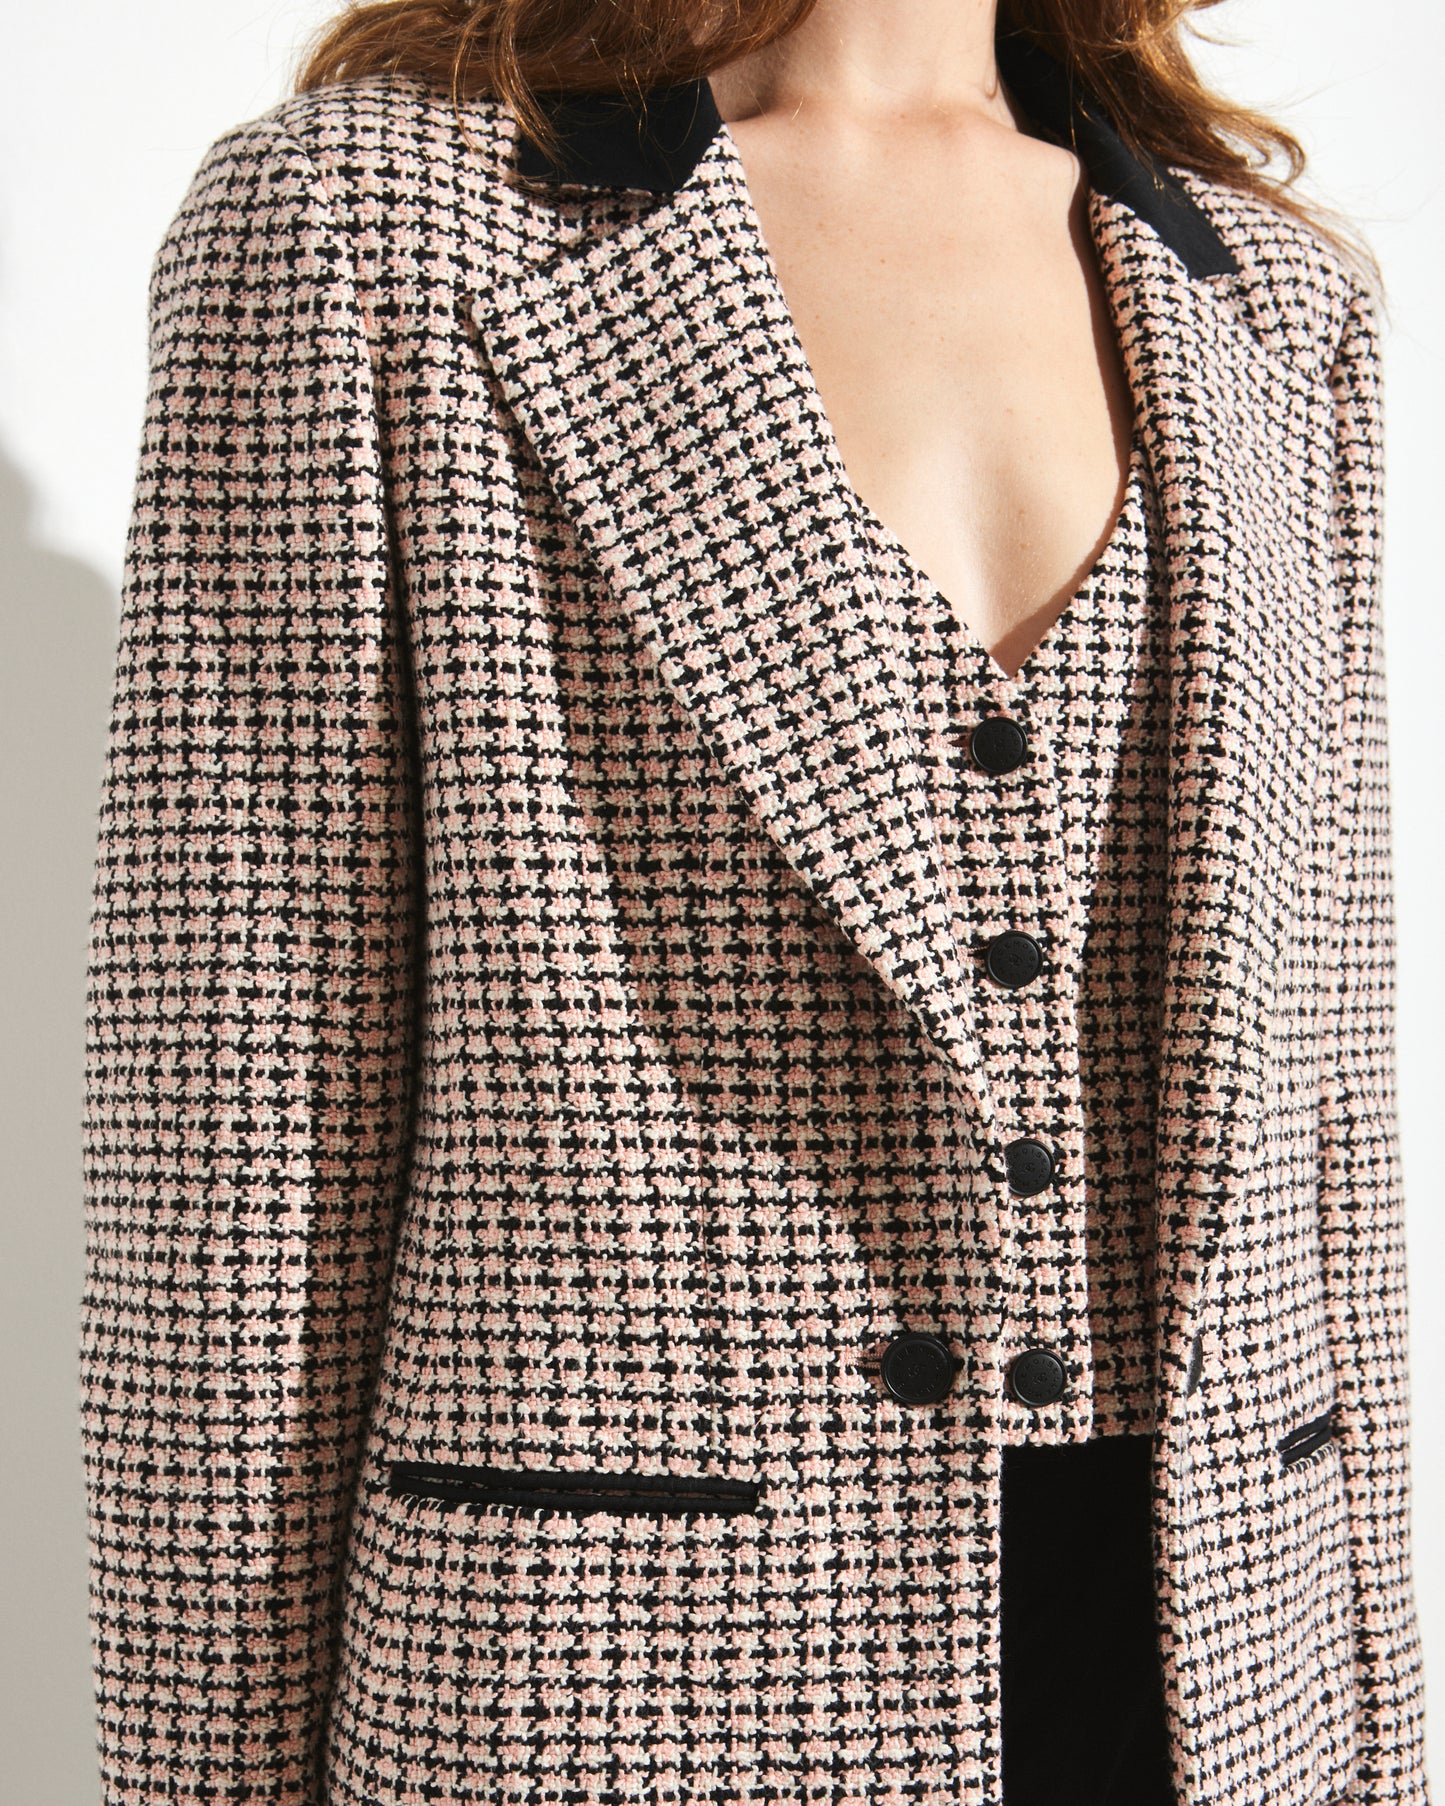 Chanel Spring 2002 Tweed Blazer with Built-in Vest